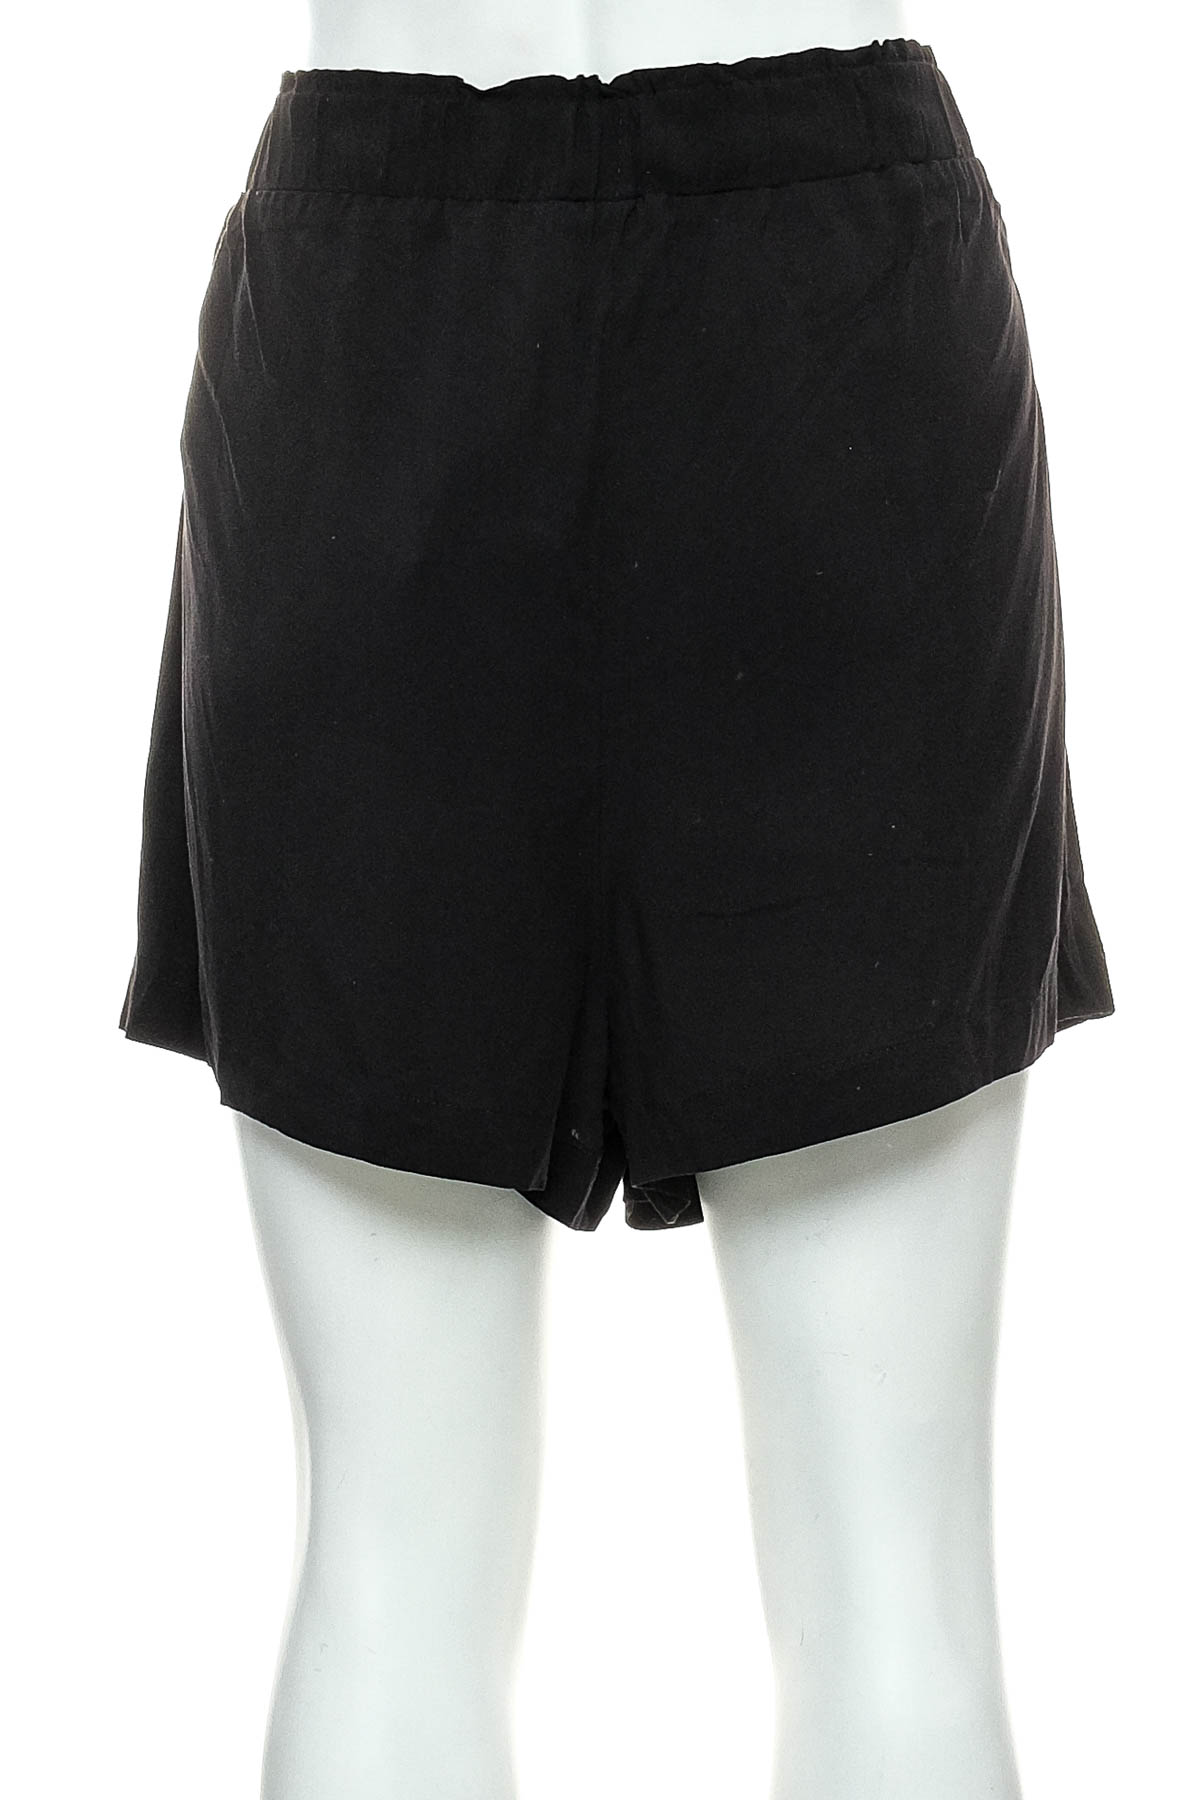 Female shorts - PRIMARK - 1